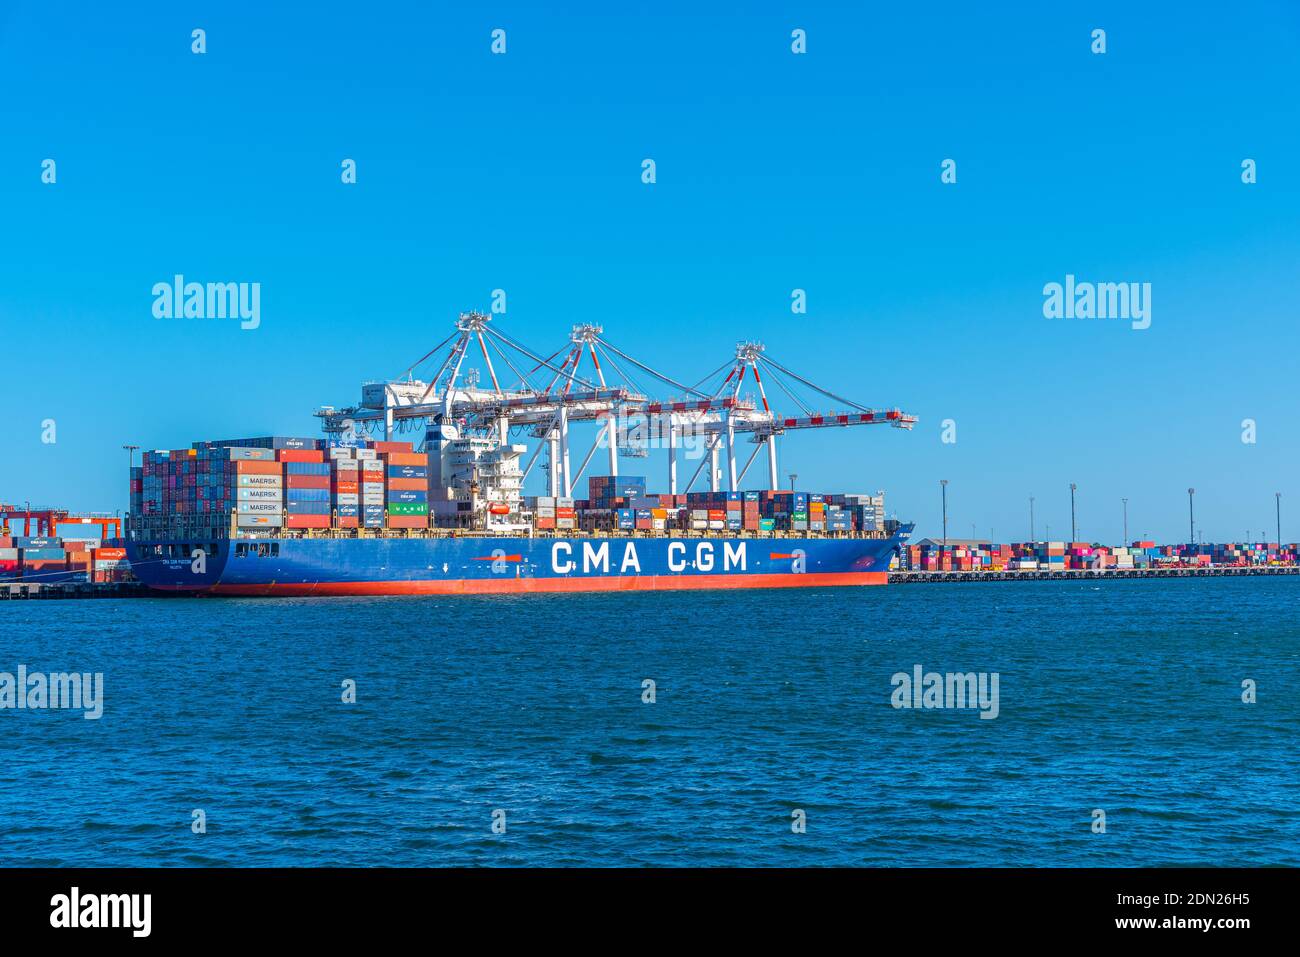 FREMANTLE, AUSTRALIA, JANUARY 19, 2020: Cargo ships at port of Fremantle in Australia Stock Photo